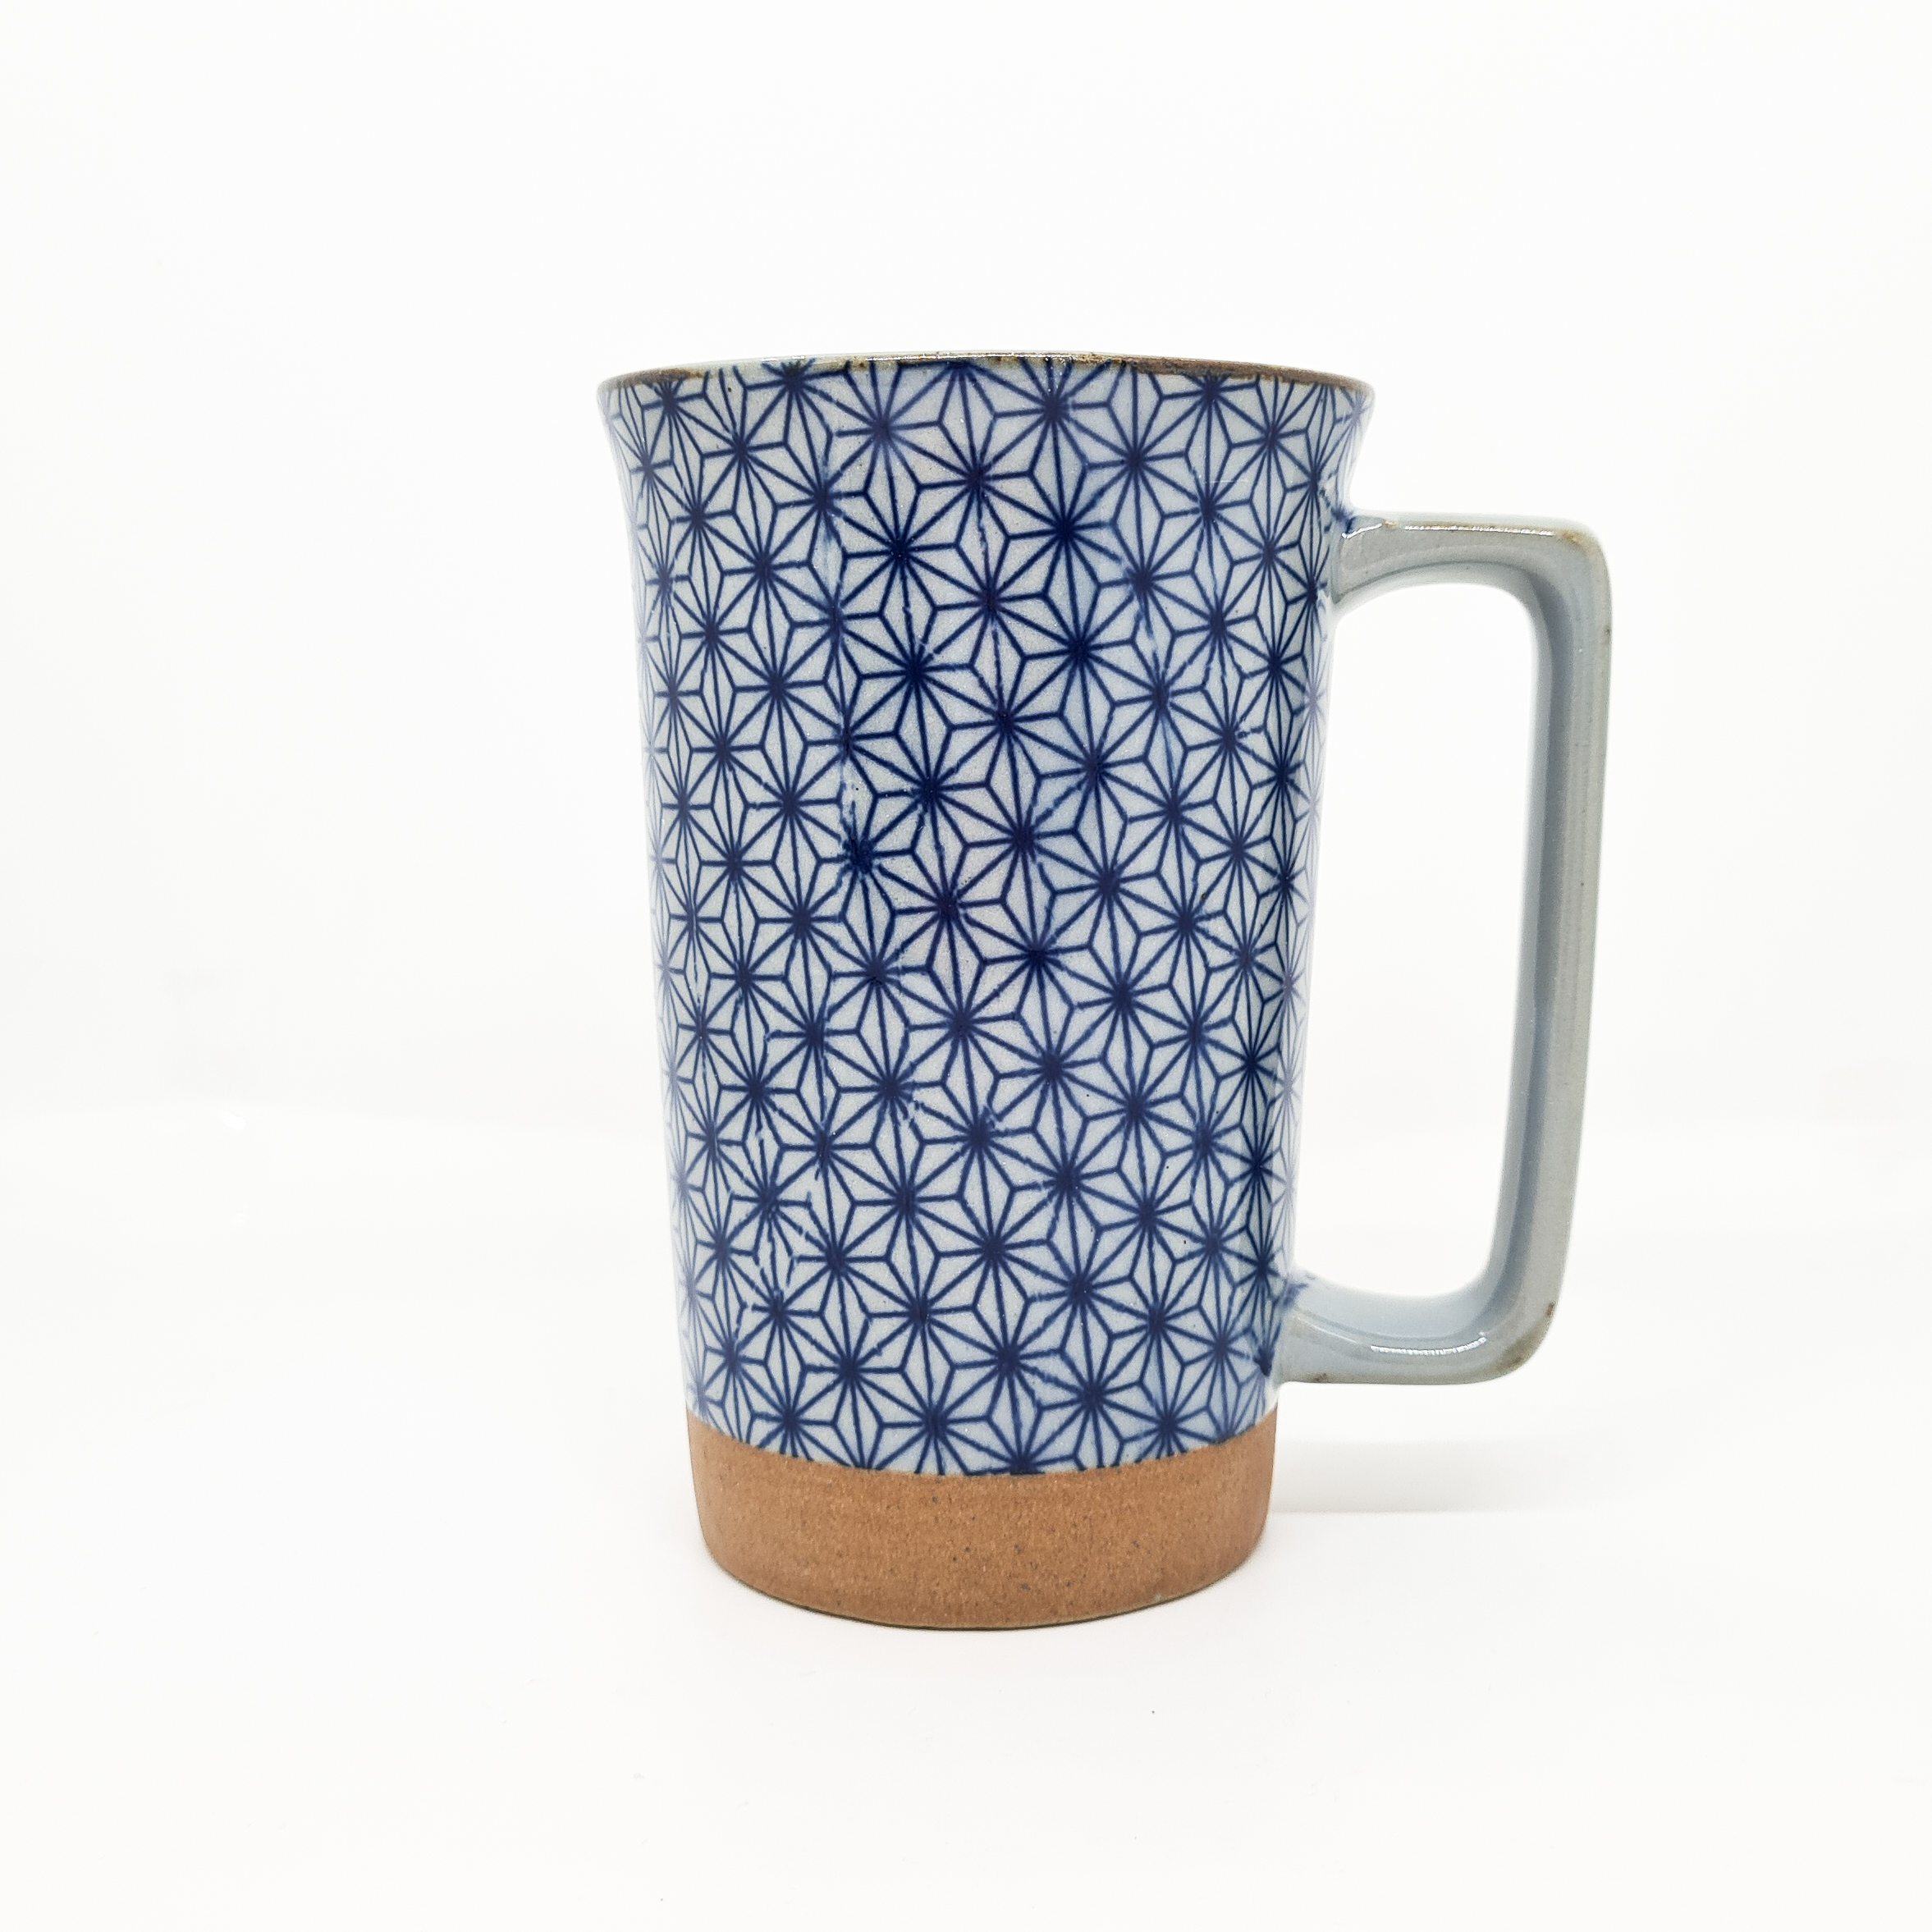 Grand mug japonais motif étoiles